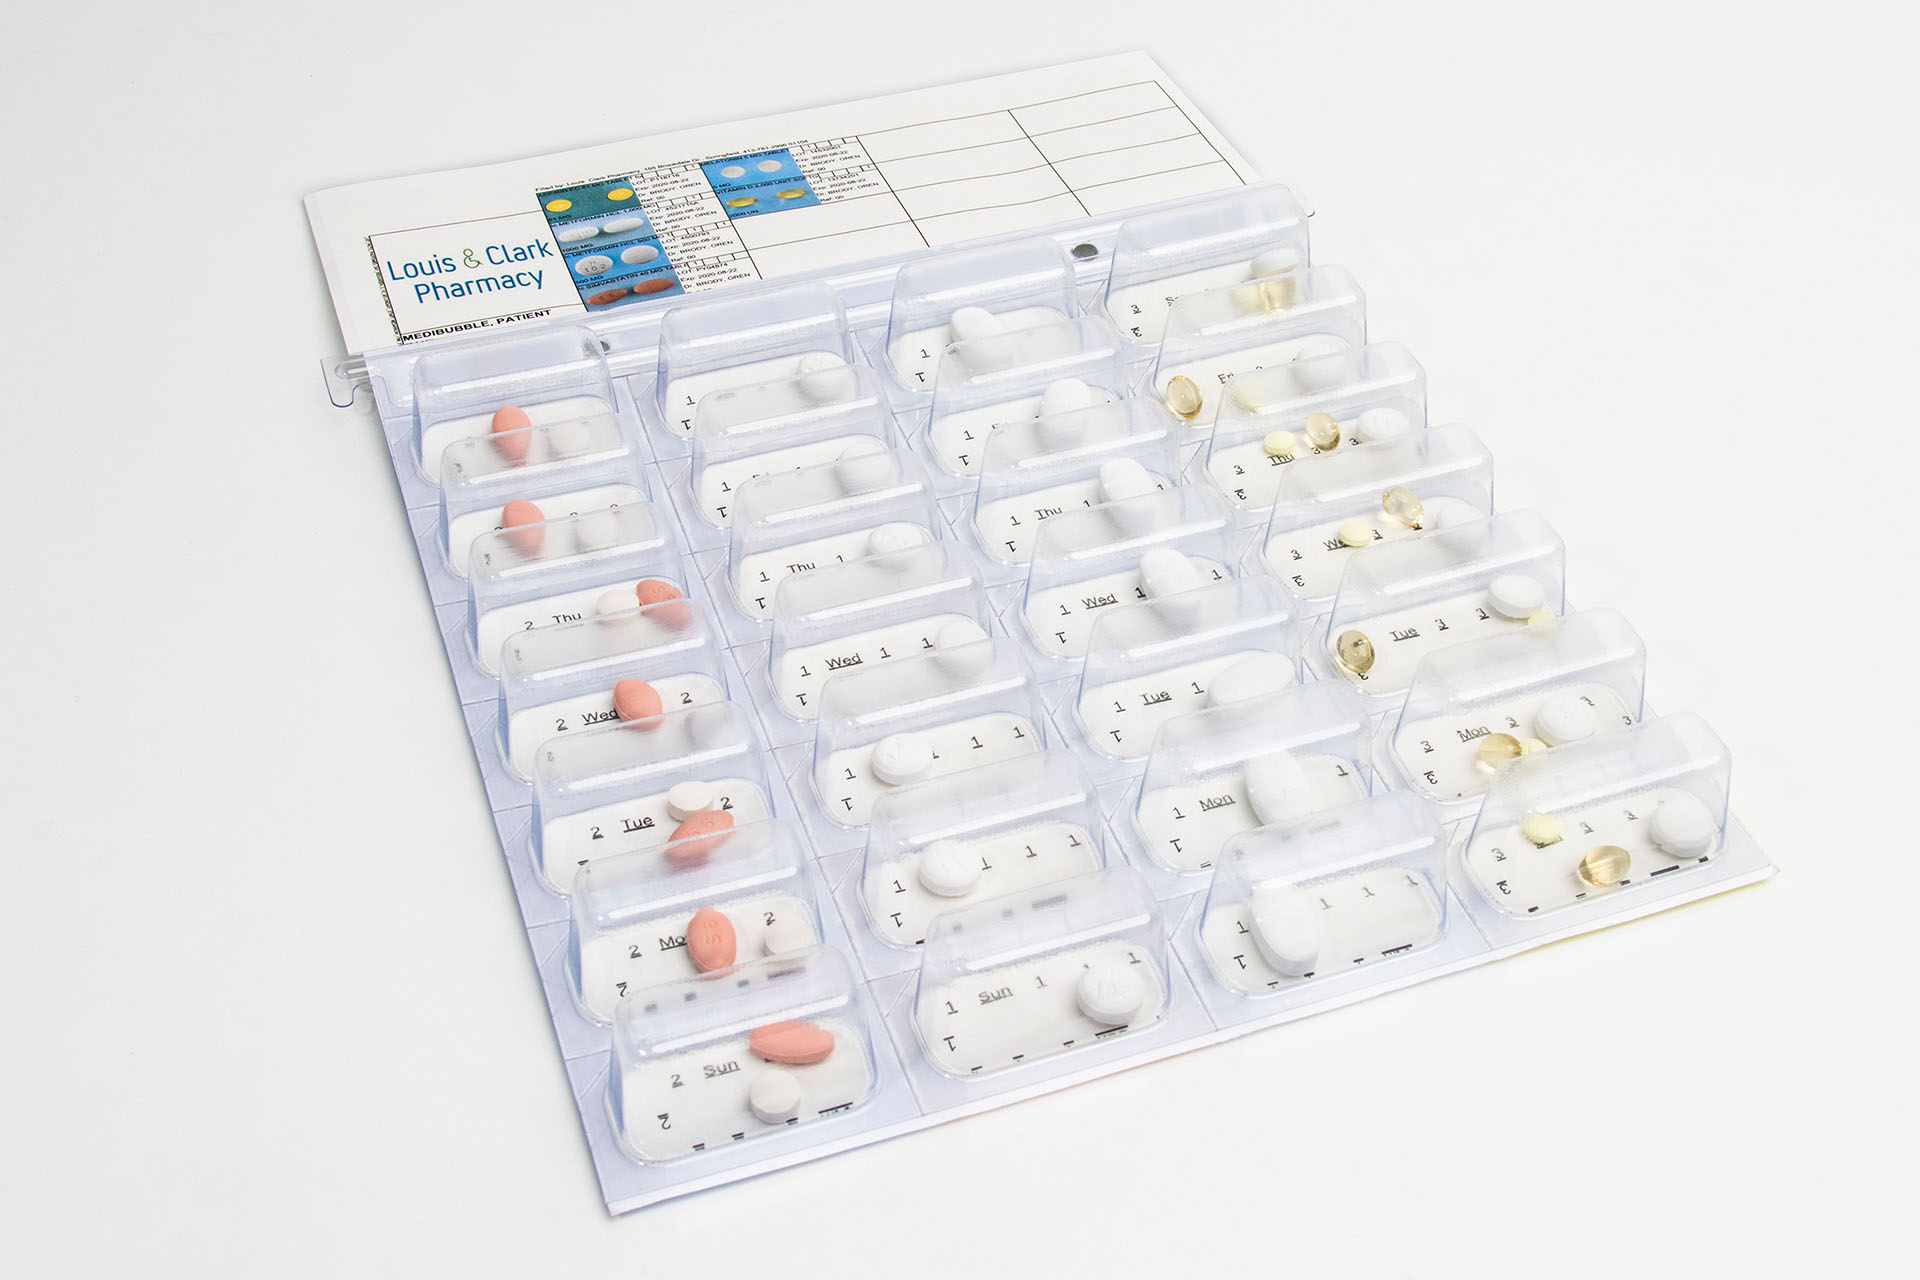 MediBubble® organizer for managing medications